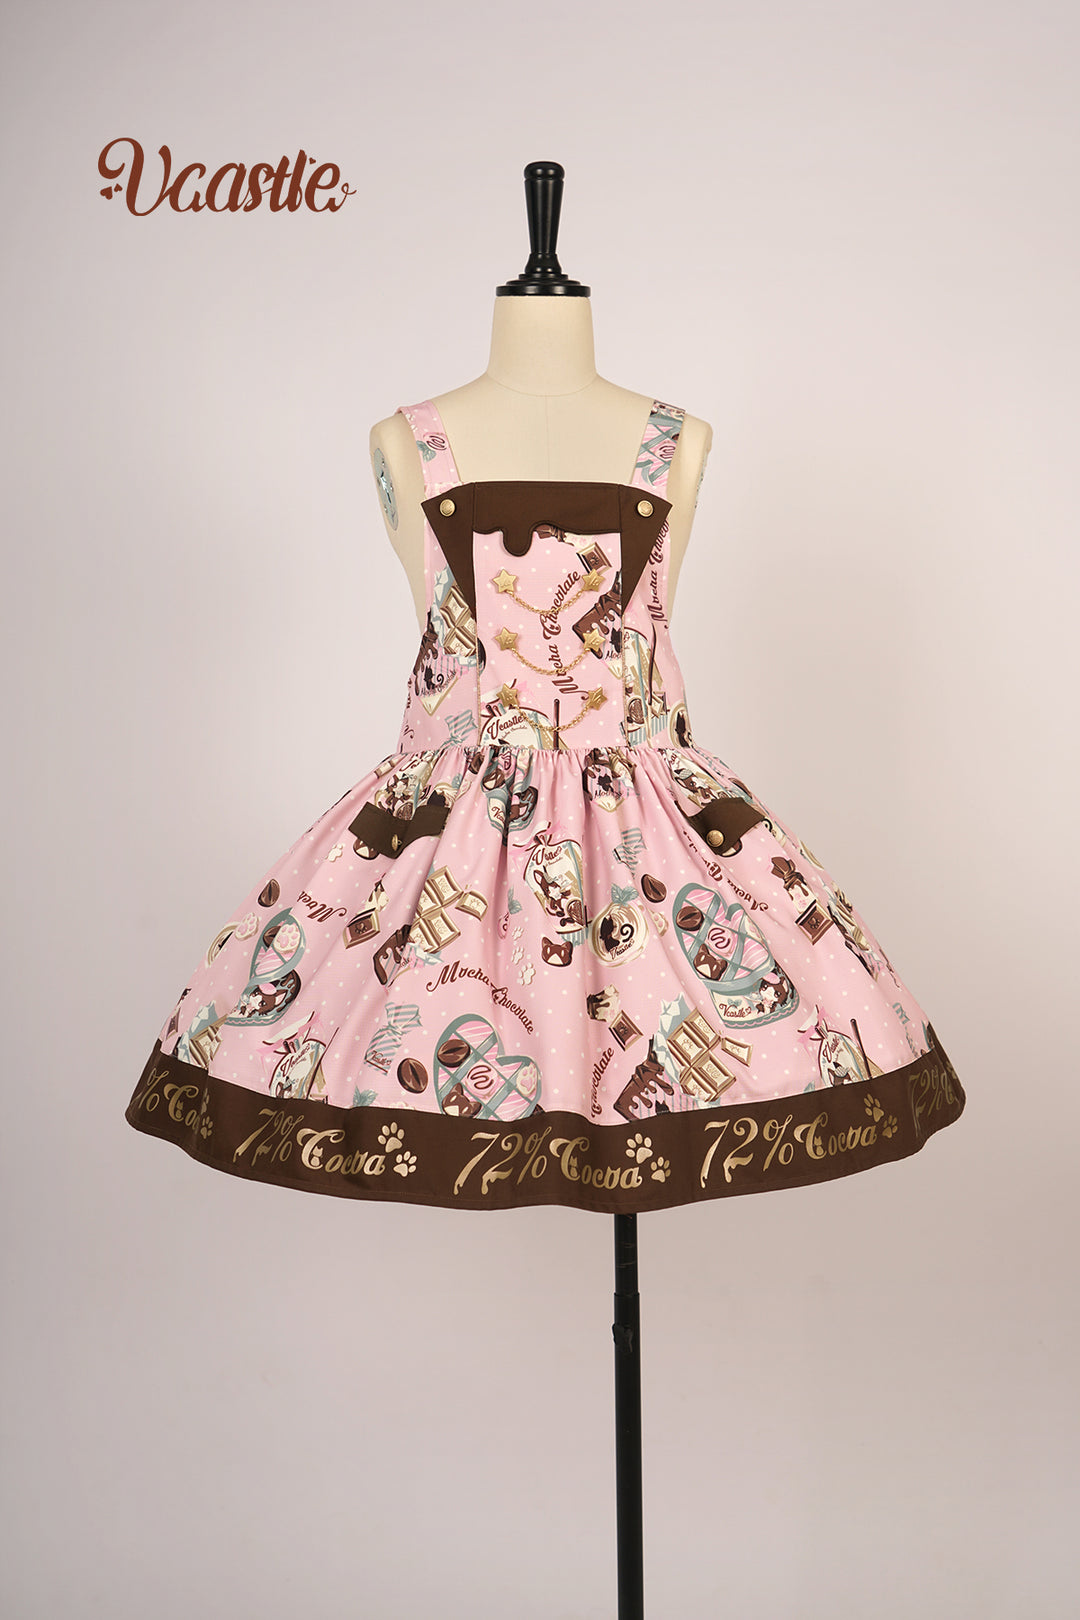 Vcastle~Mocha Choc~Kawaii Lolita Slopette Dress Suit Multicolors S pink suspender skirt 